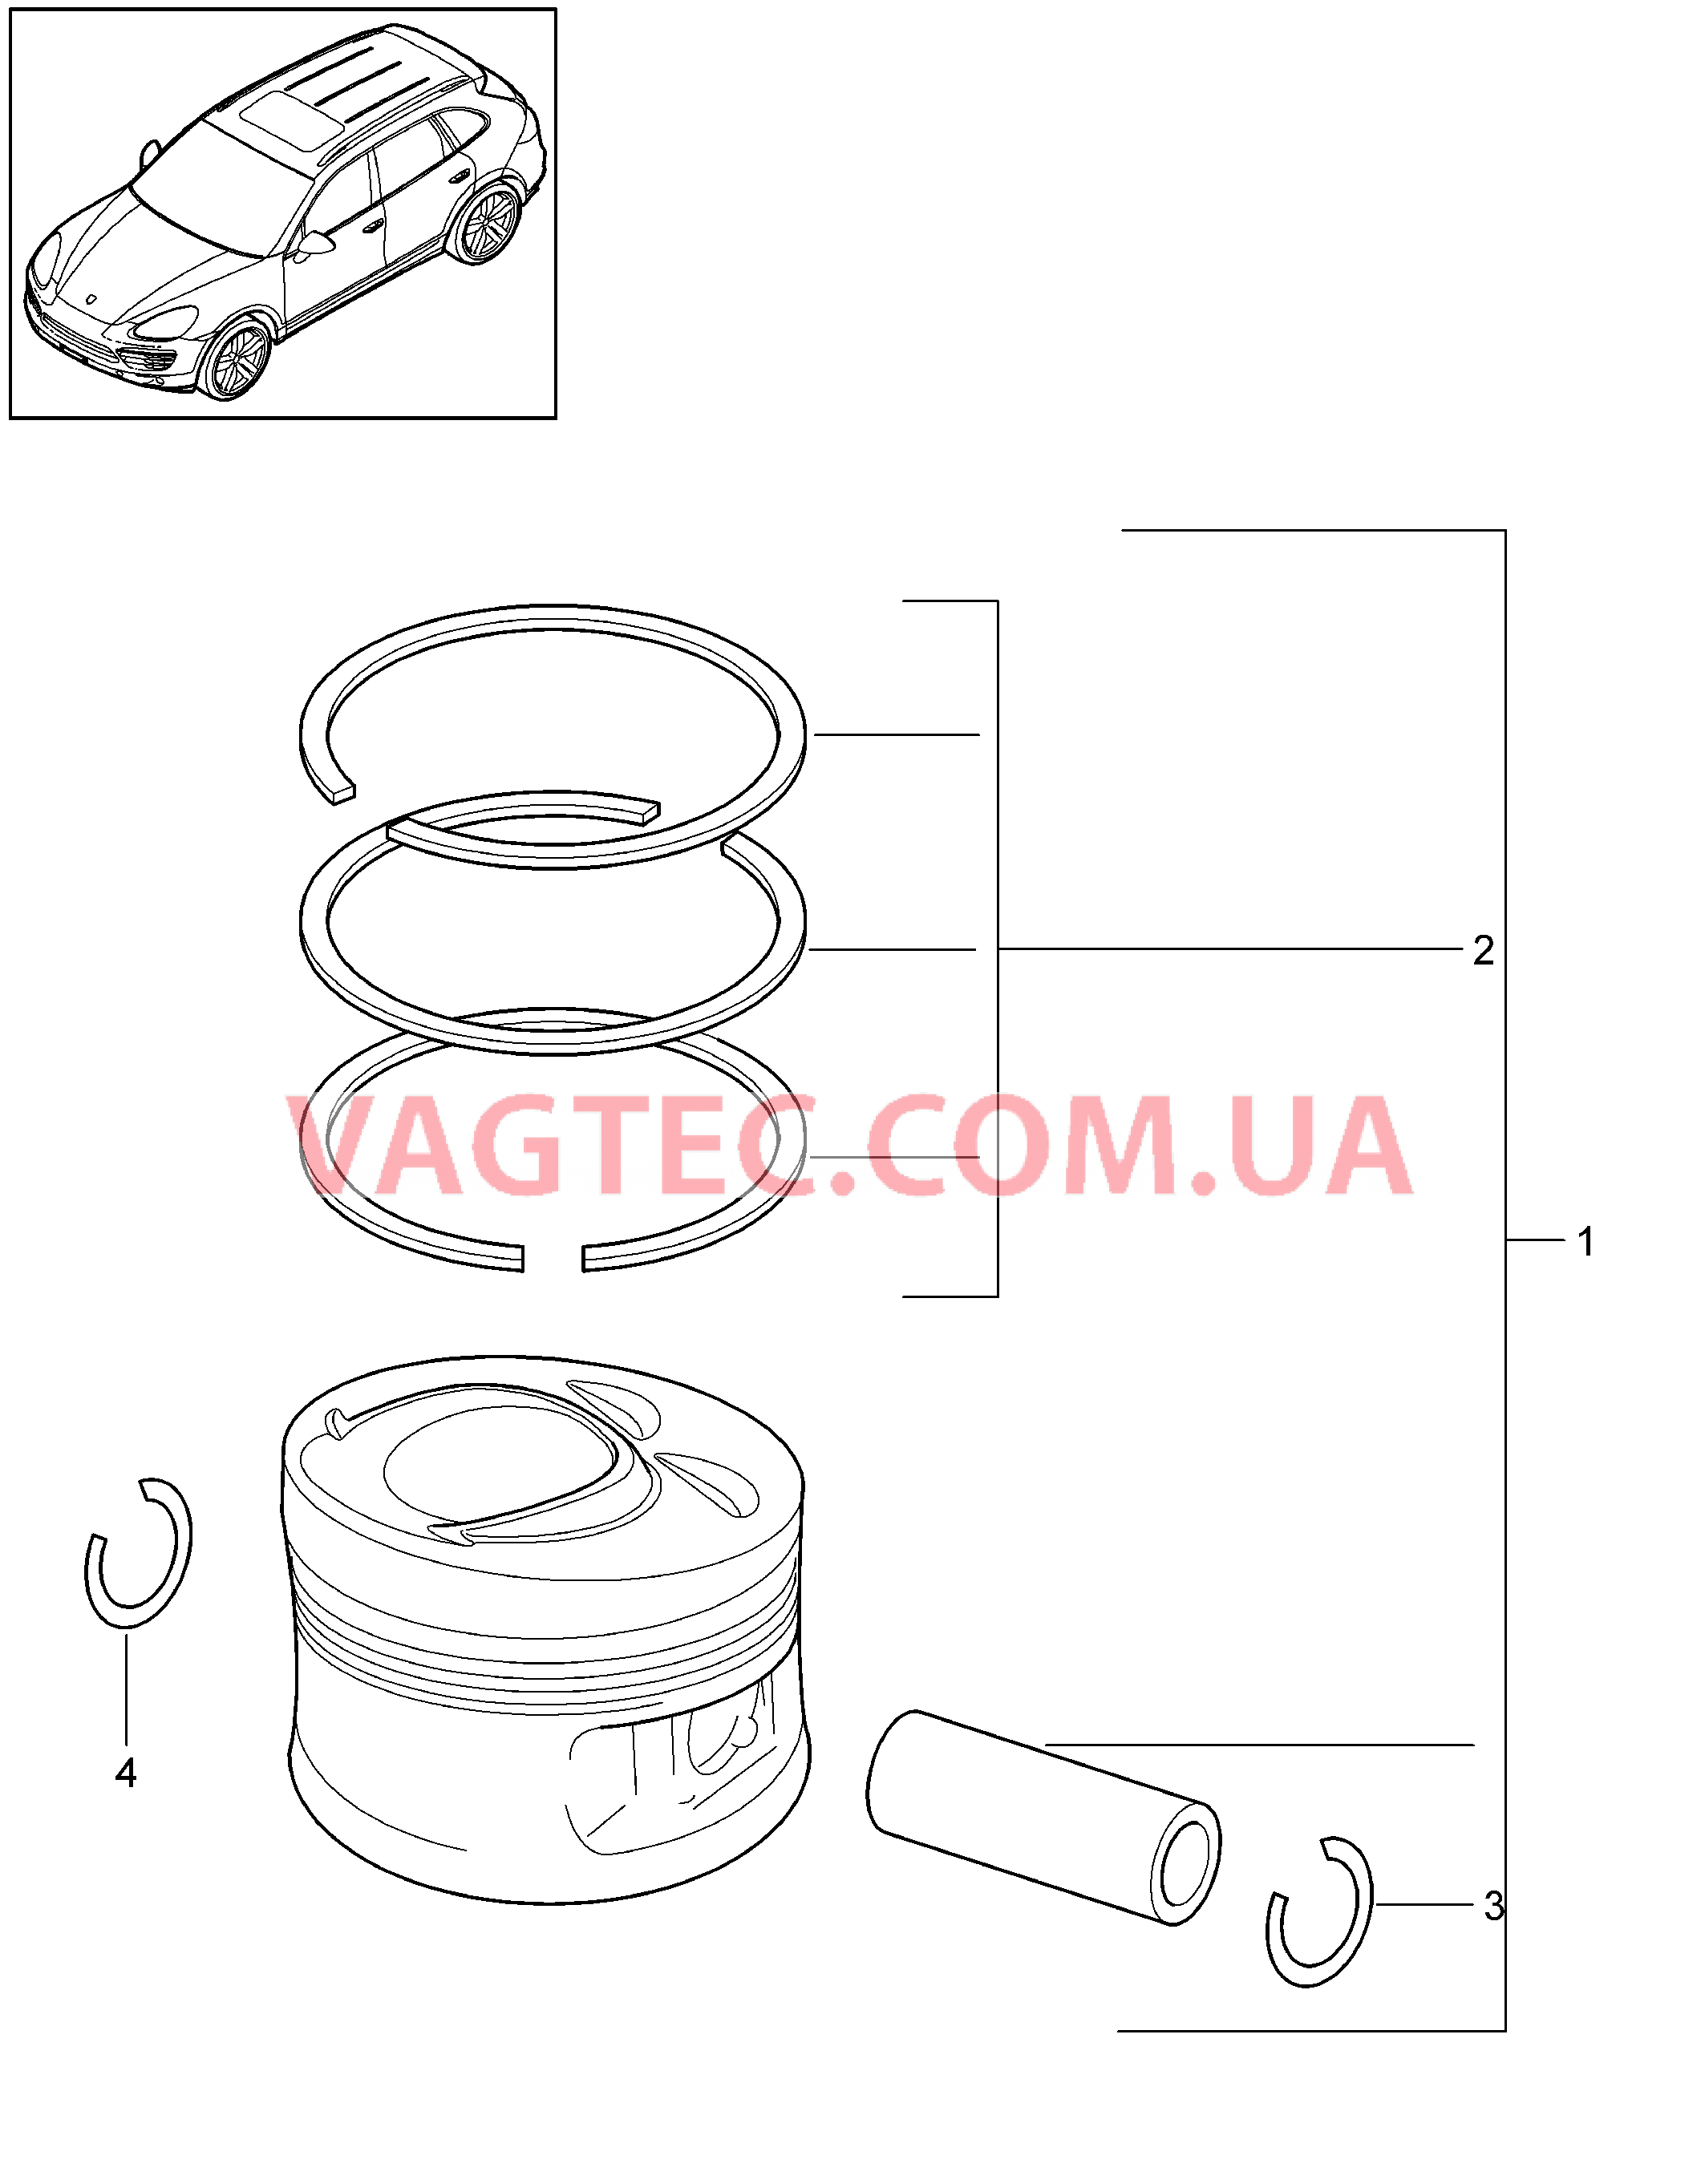 102-055 Поршень, Поршневые кольца
						
						MCE.YA, M55.02 для PORSCHE Cayenne 2011-2018